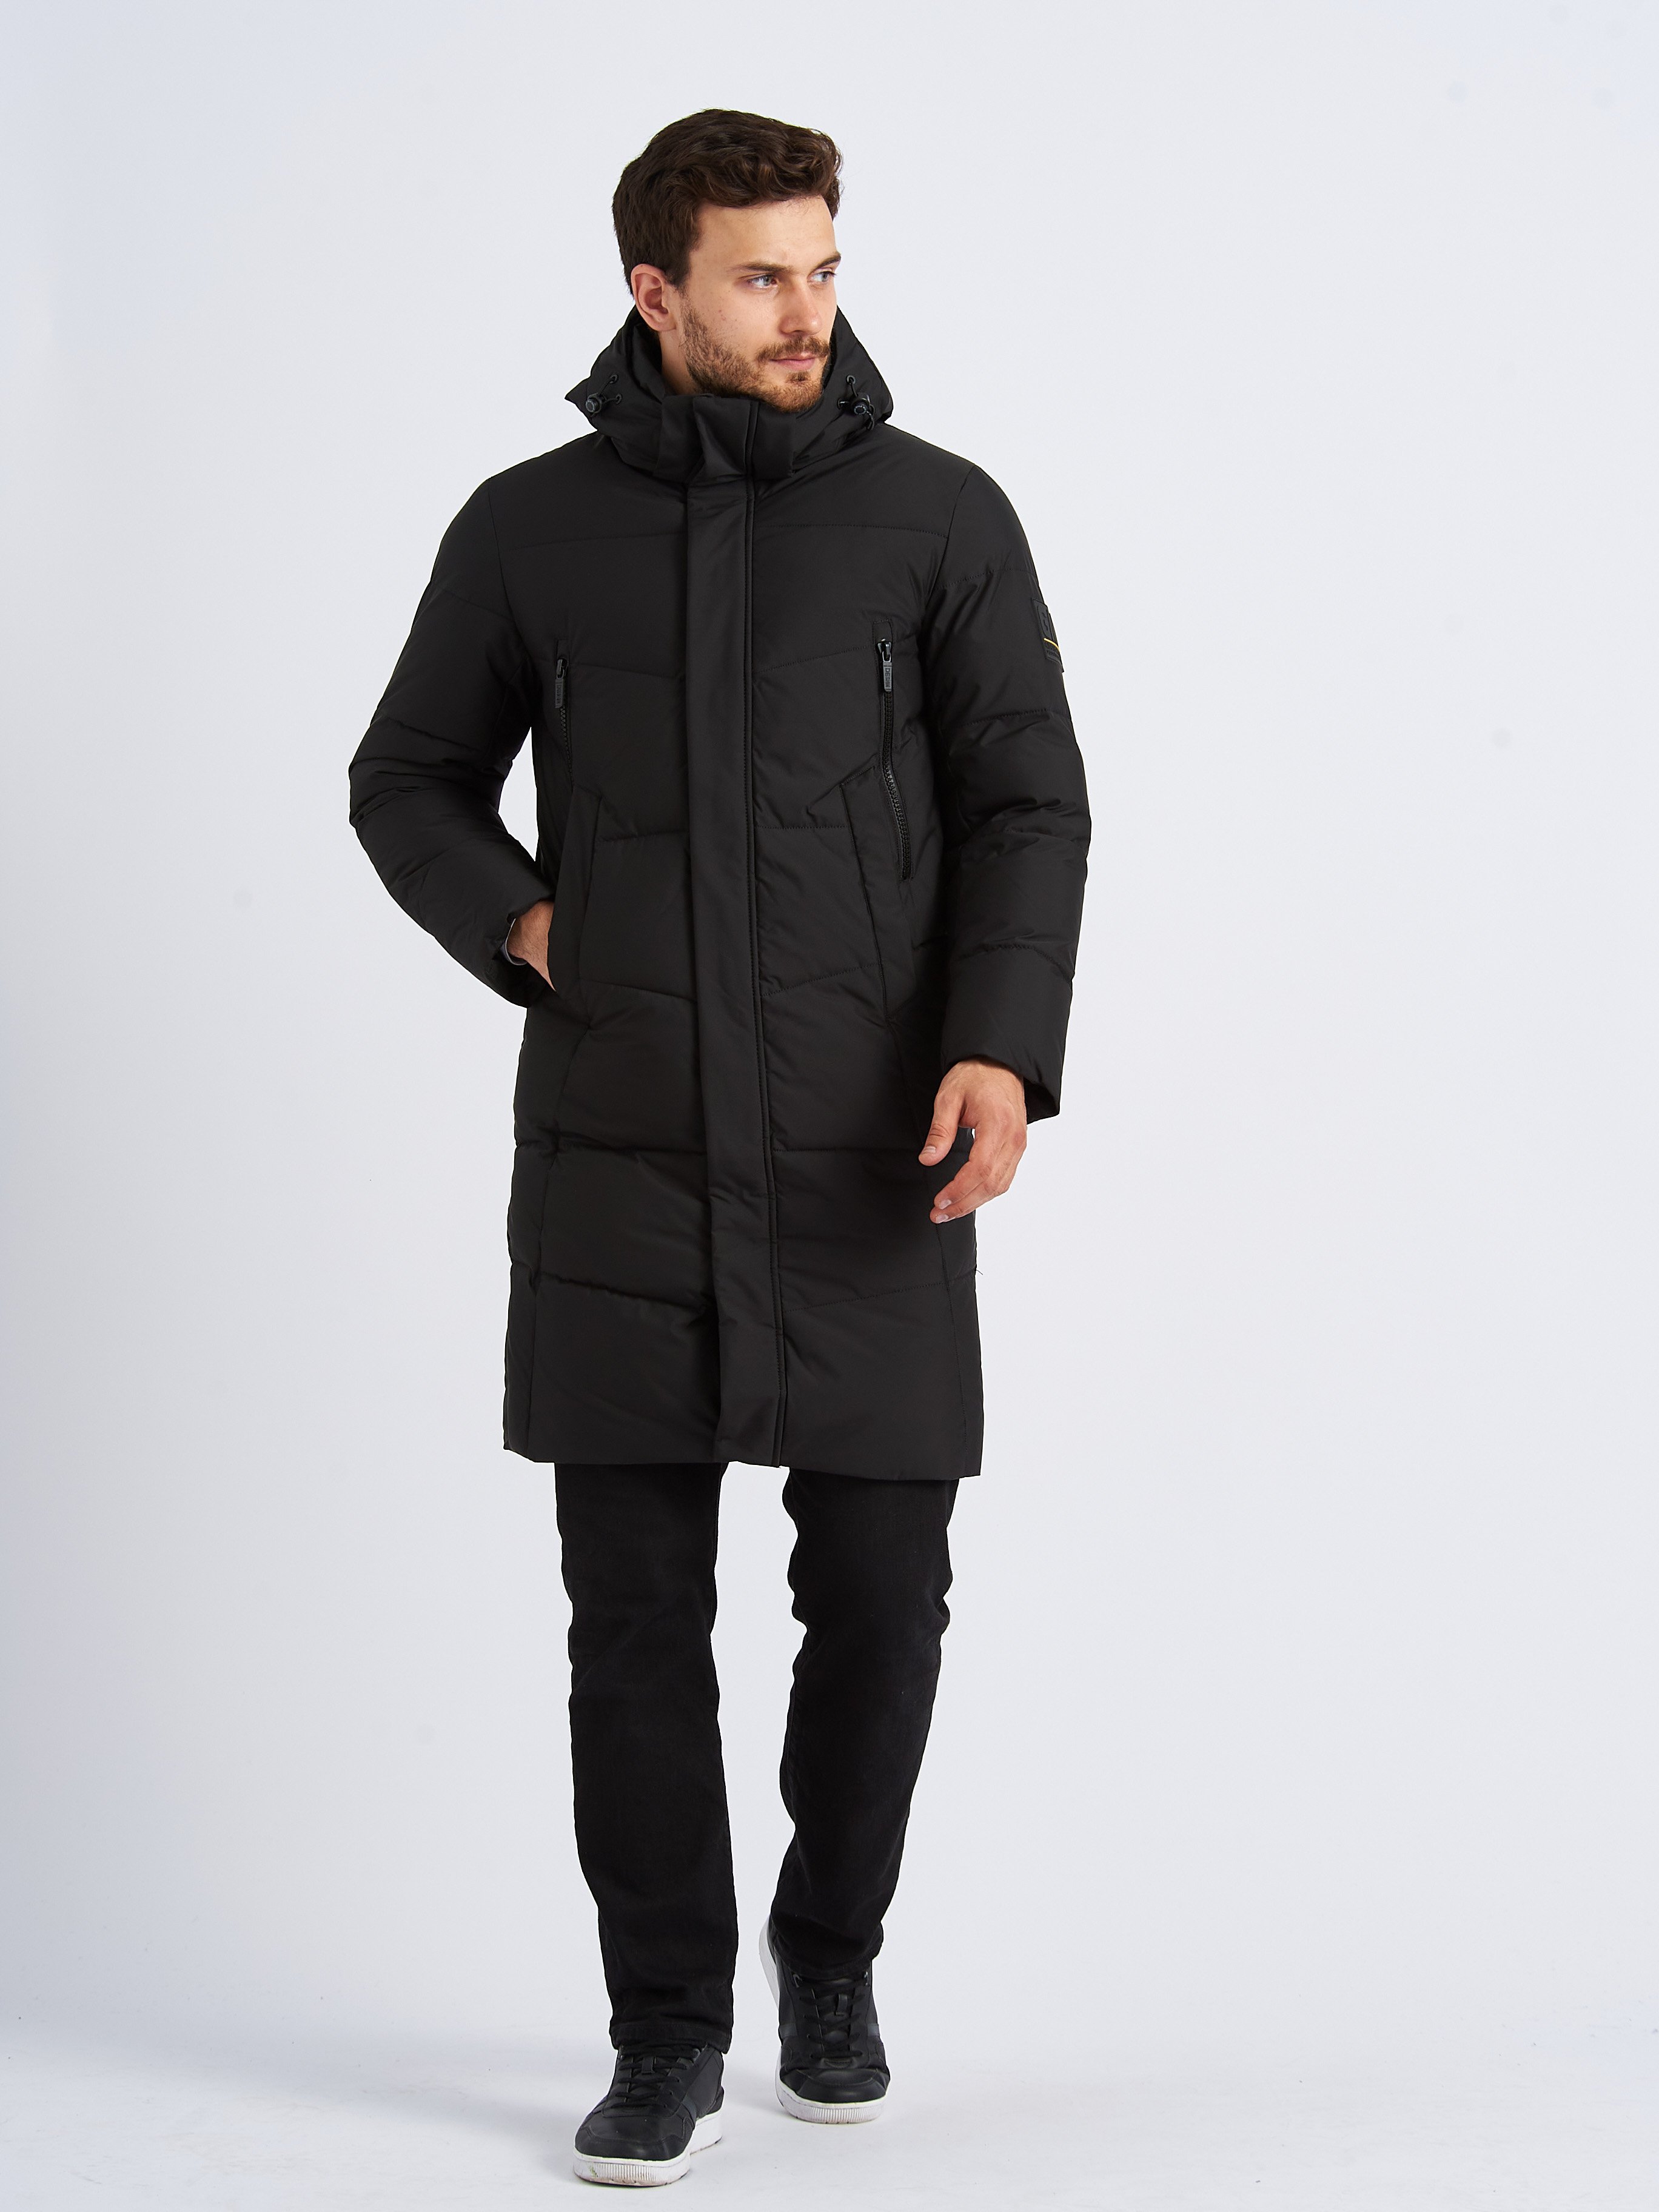 Пальто Grizman для мужчин, чёрное, размер 54, 71715